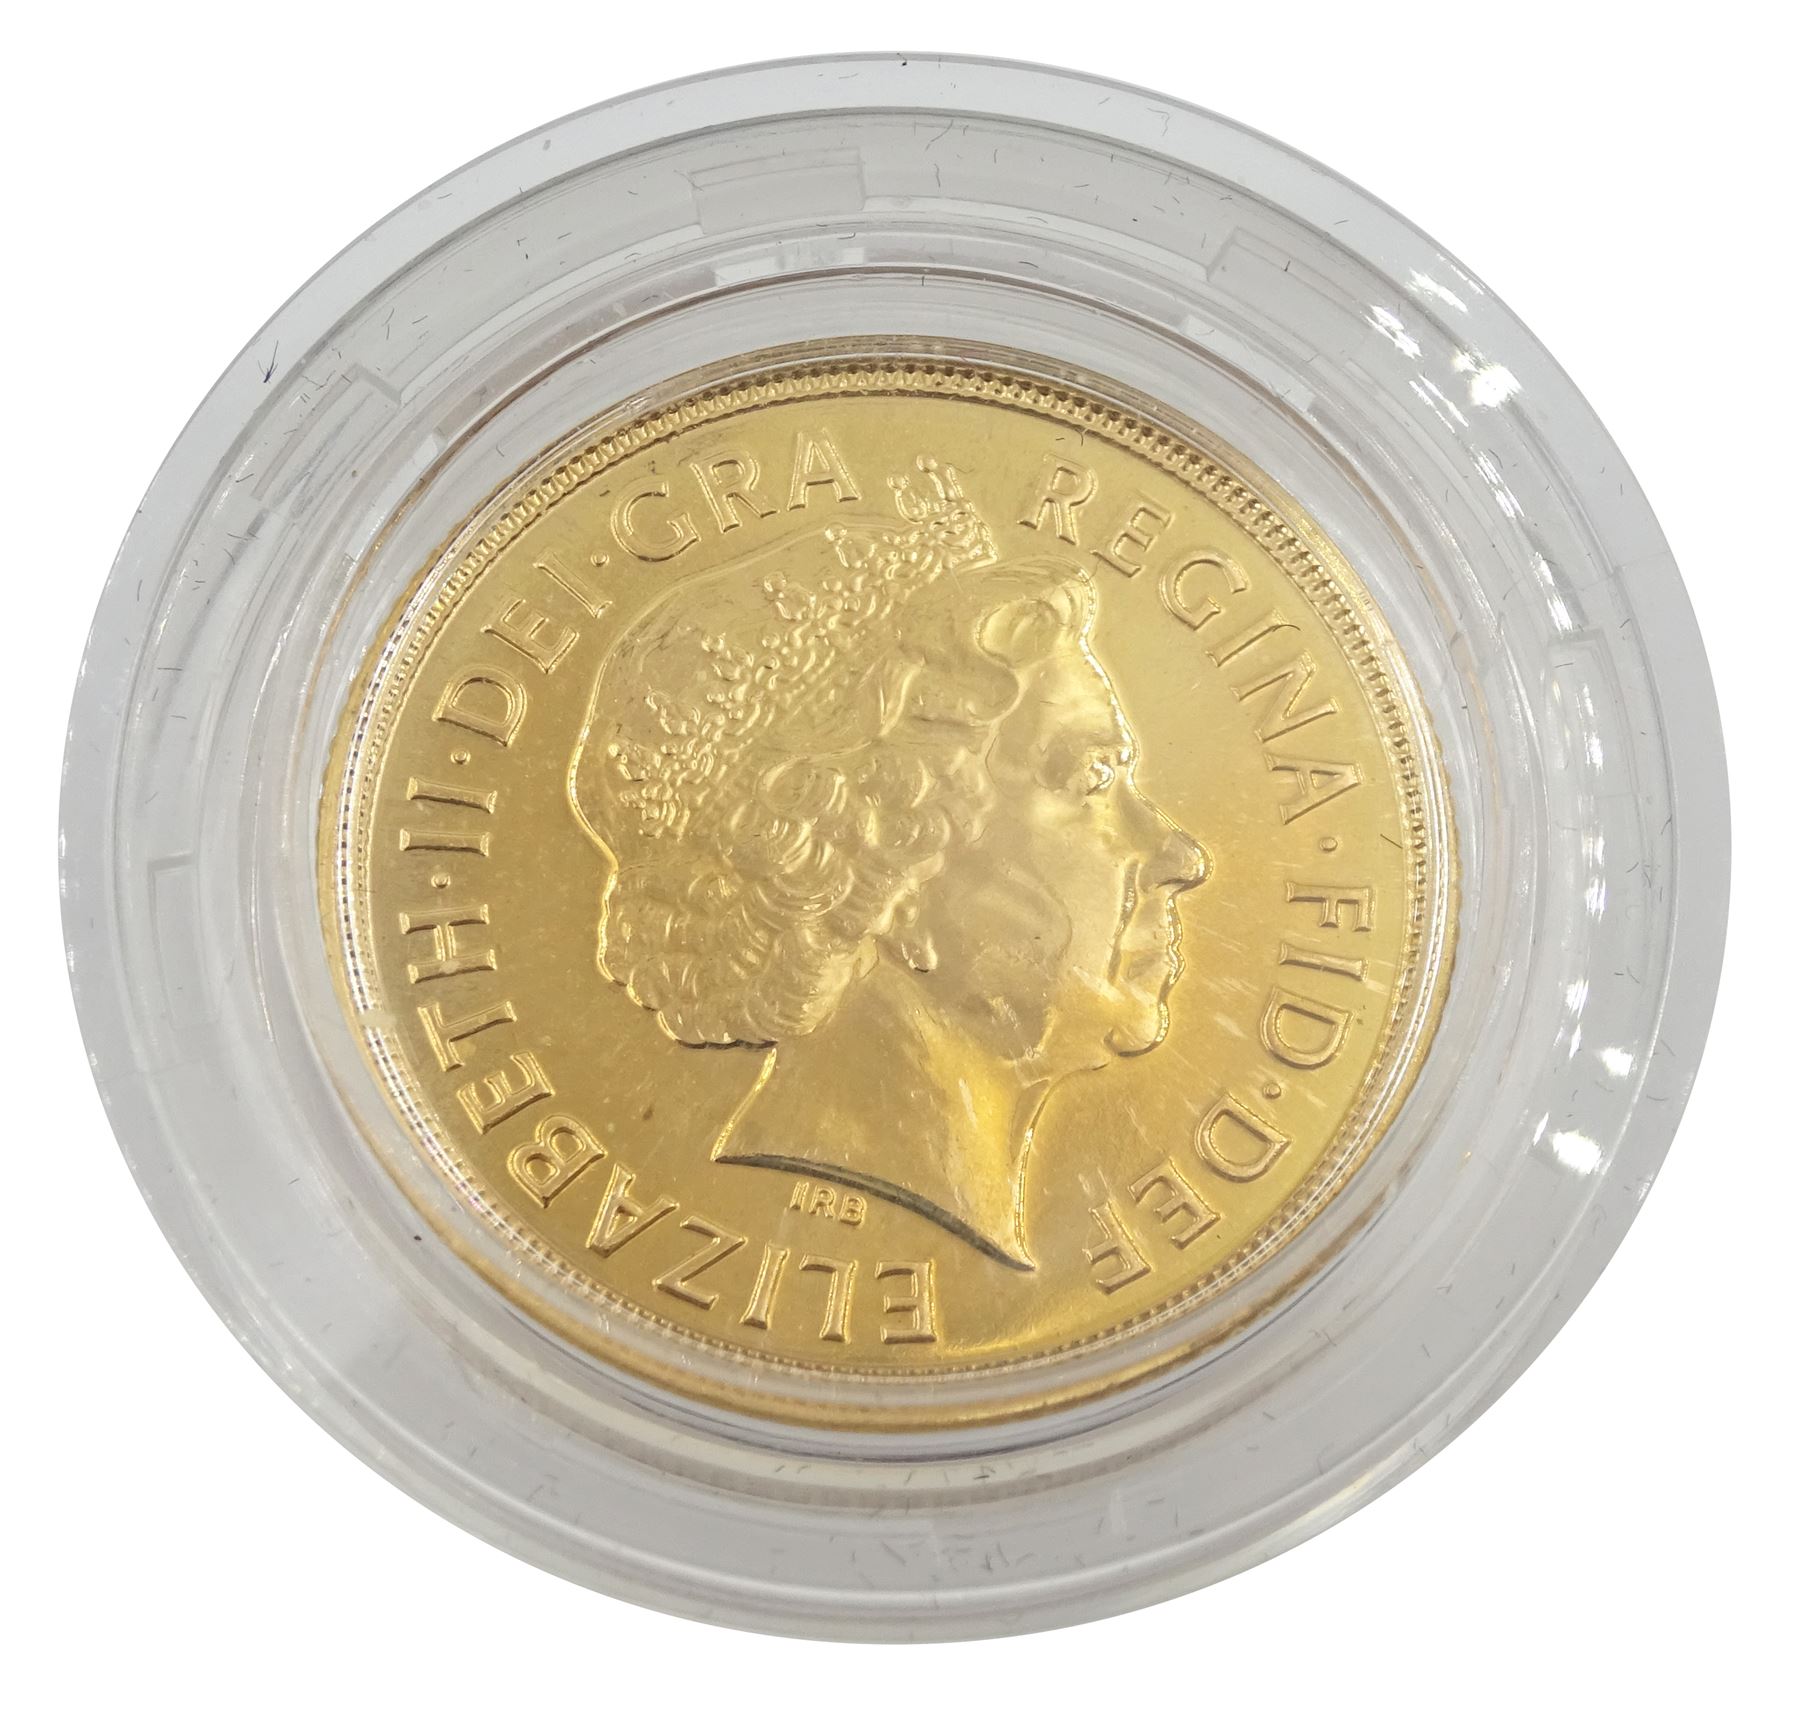 Queen Elizabeth II 2012 Diamond Jubilee celebration gold full sovereign coin - Image 2 of 2